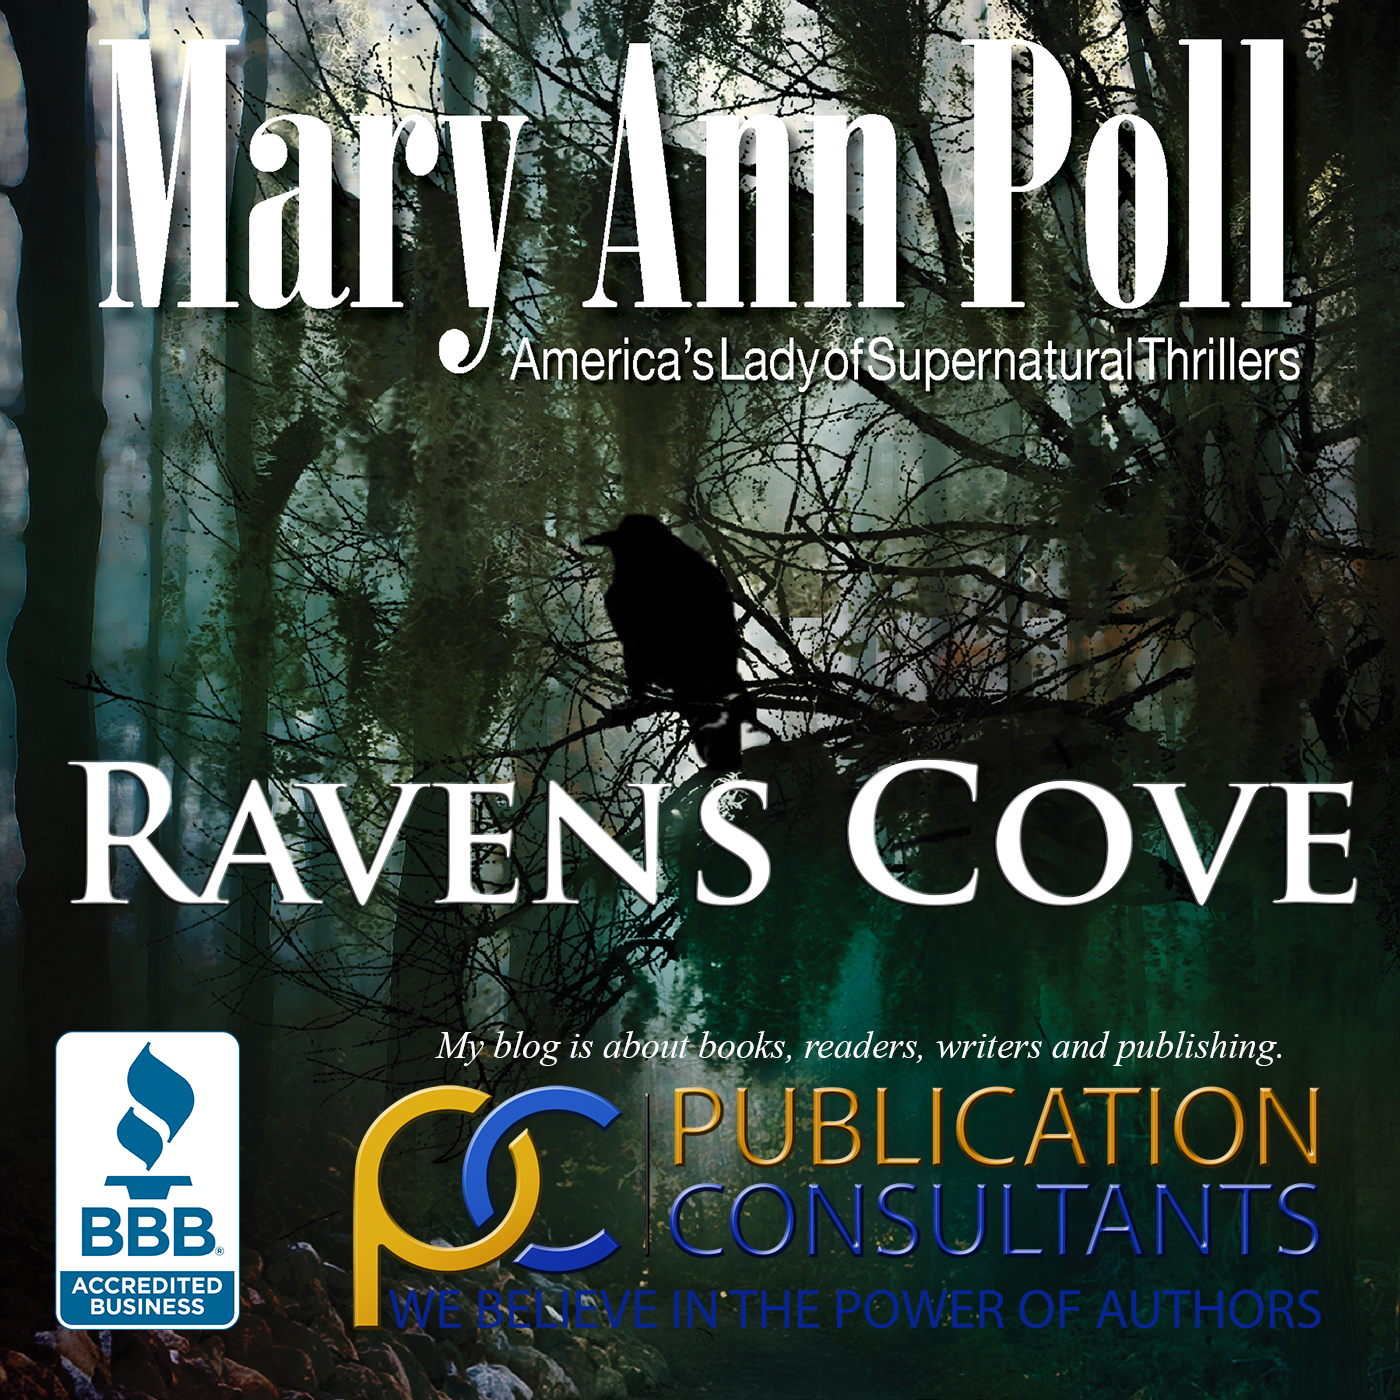 Ravens Cove